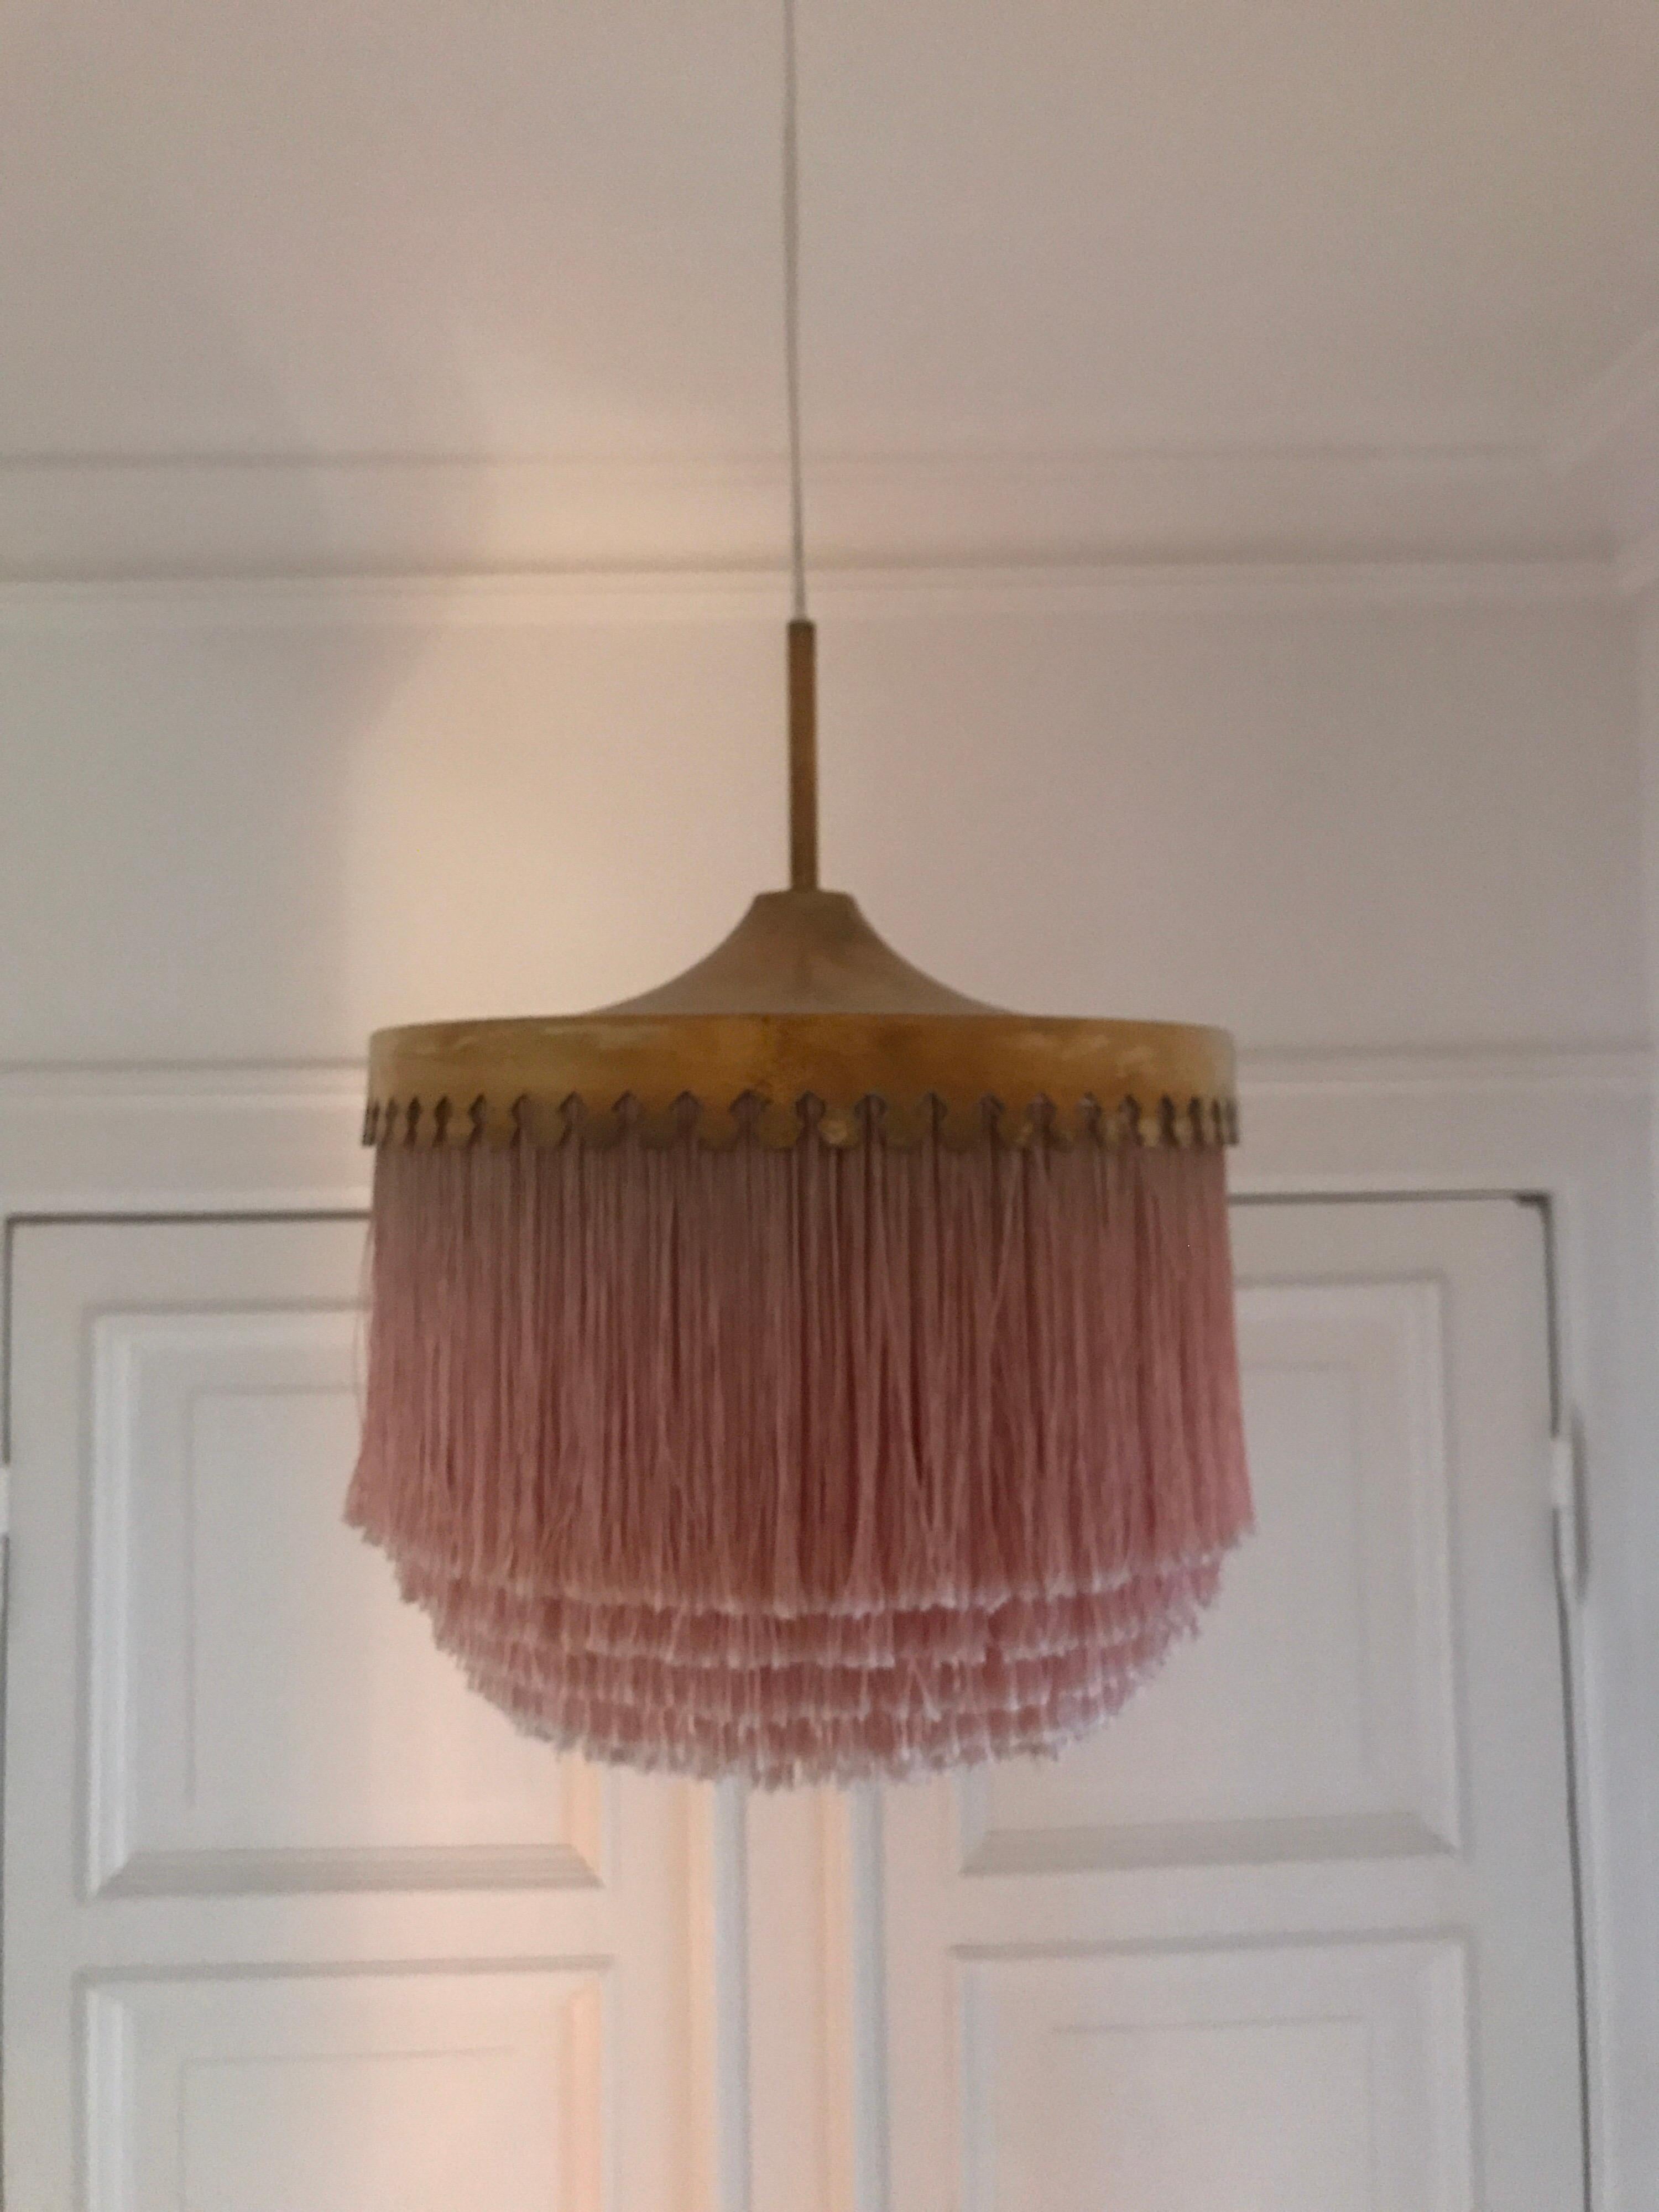 Hans Agne Jakobsson, ceiling lamp, Sweden, 1960s
Pink fringed lamp.